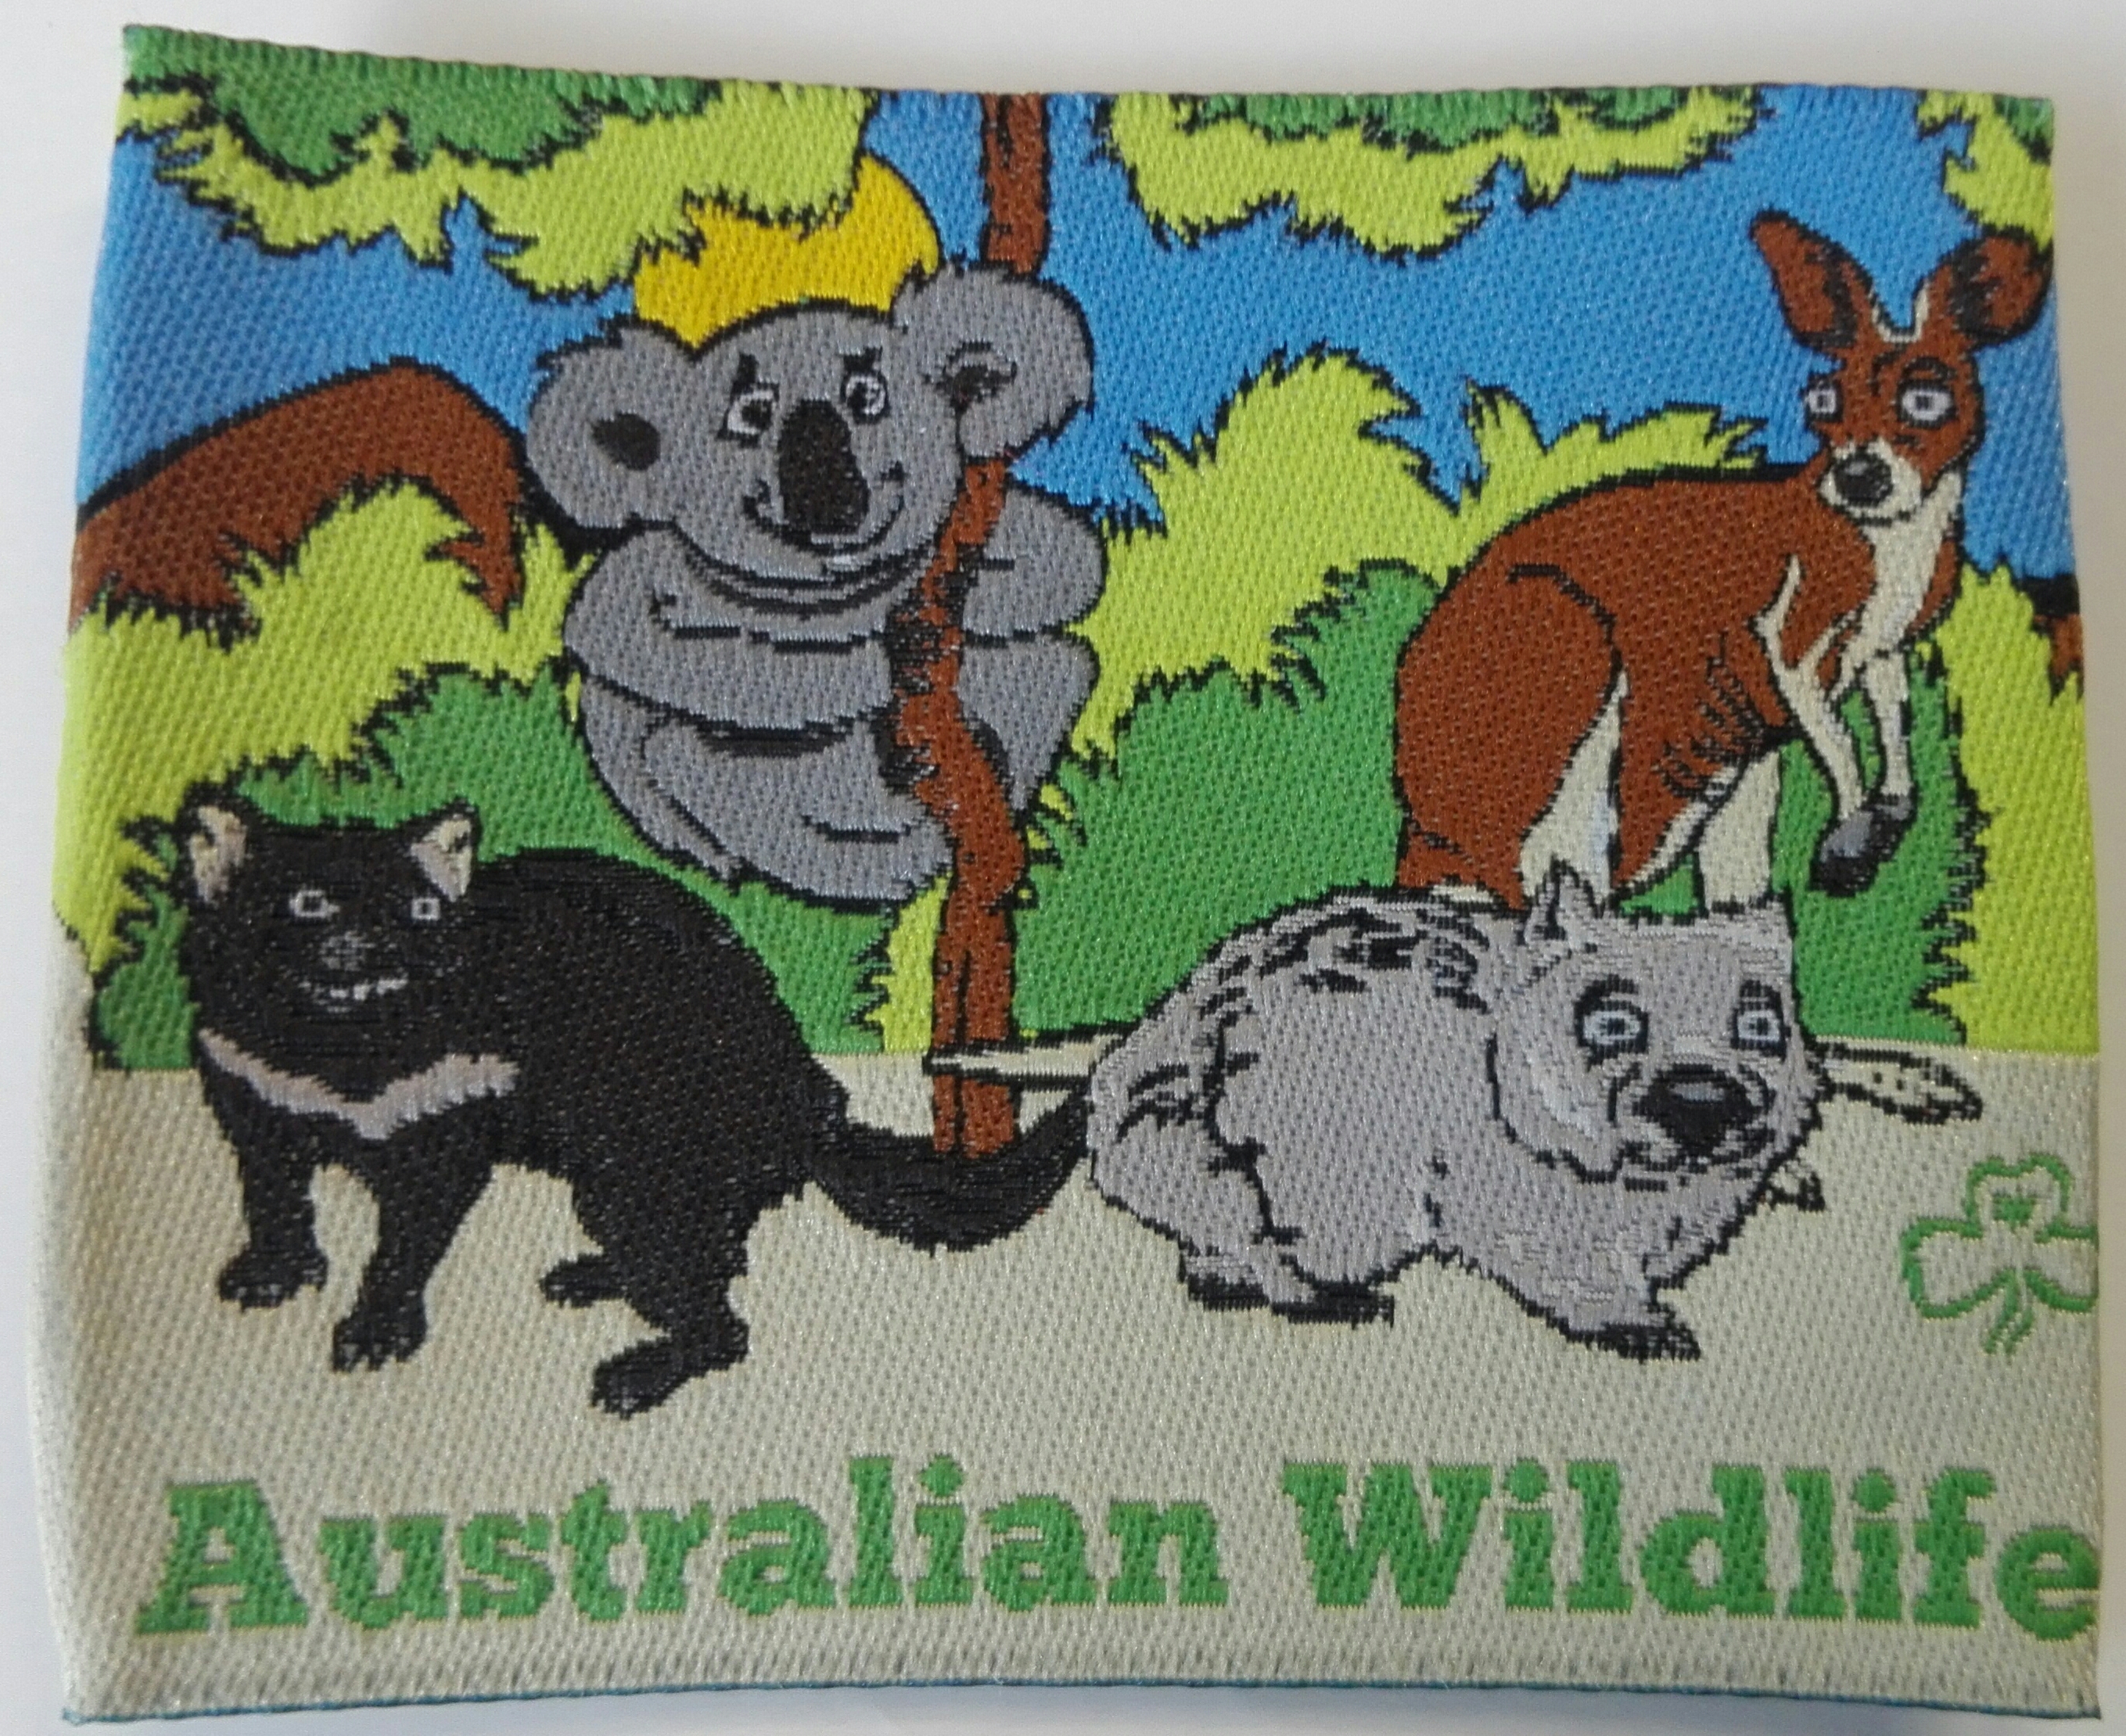 Australian Wildlife